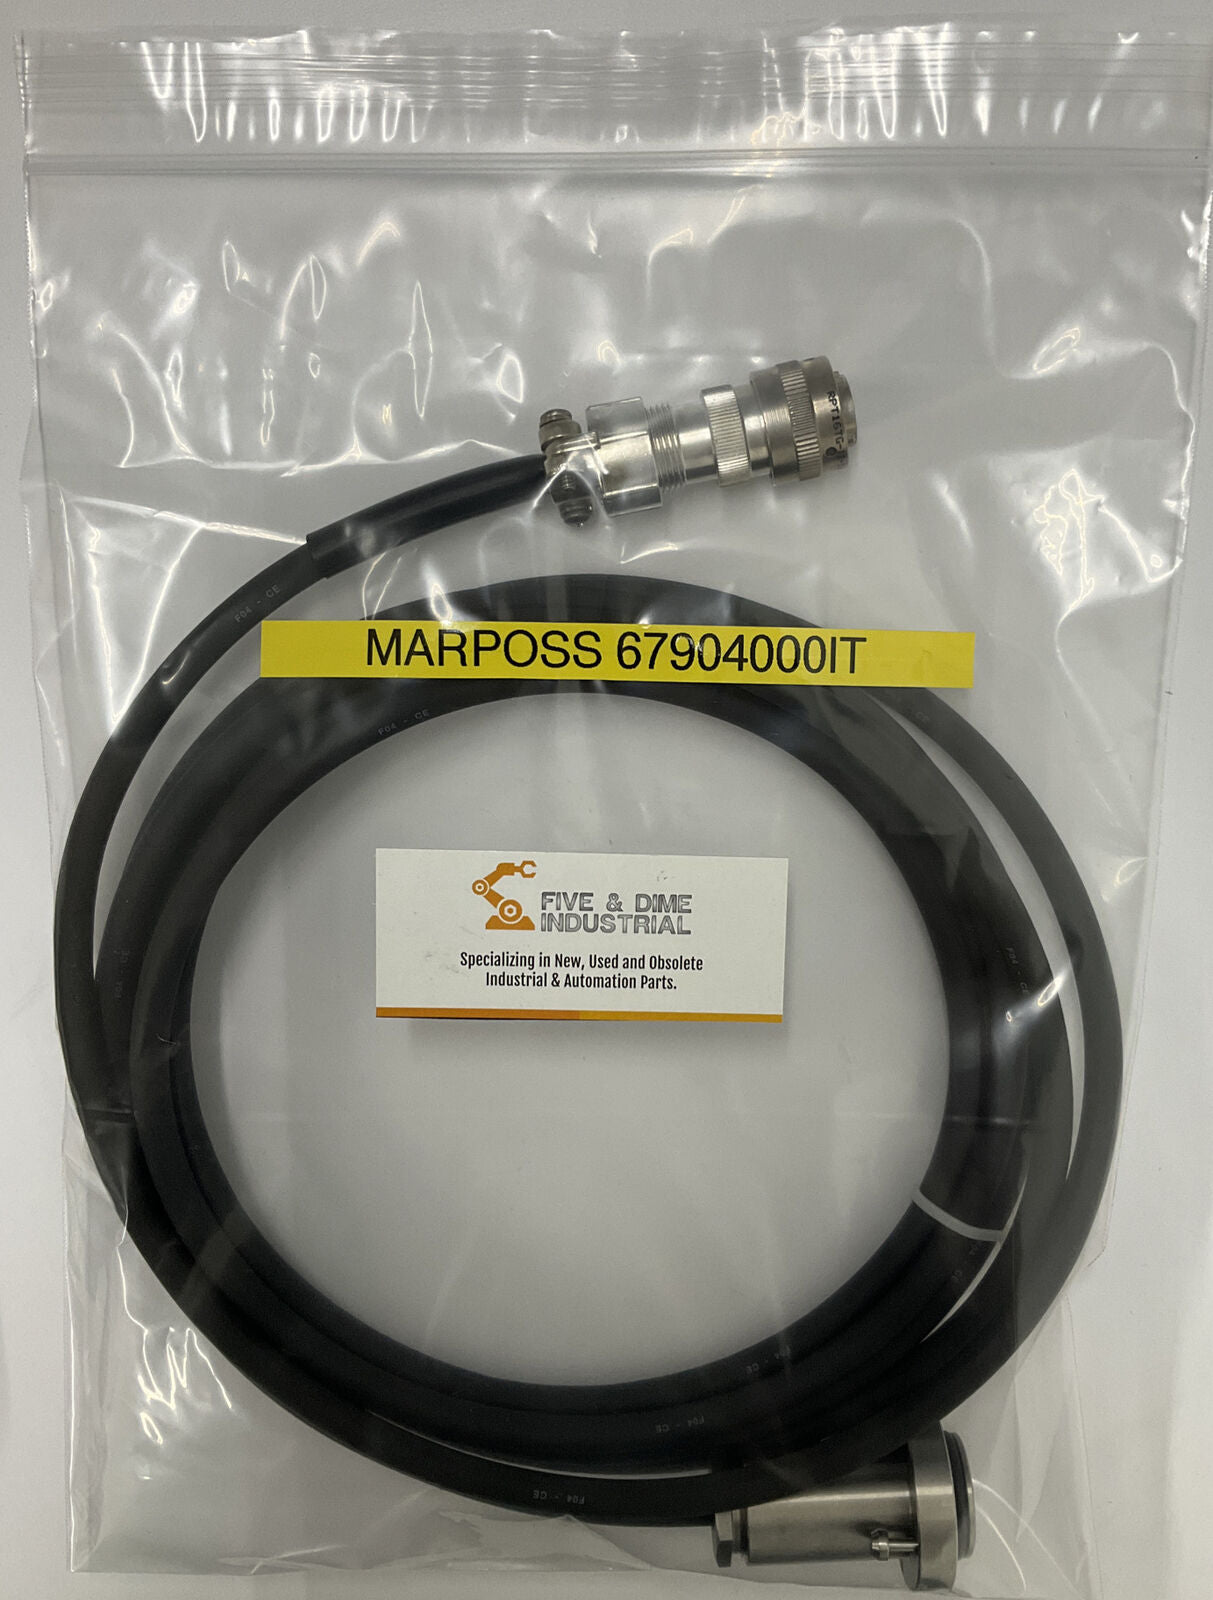 Marposs 679040001T Unimar J Box Extension Cable 4-Meters (CBL125)